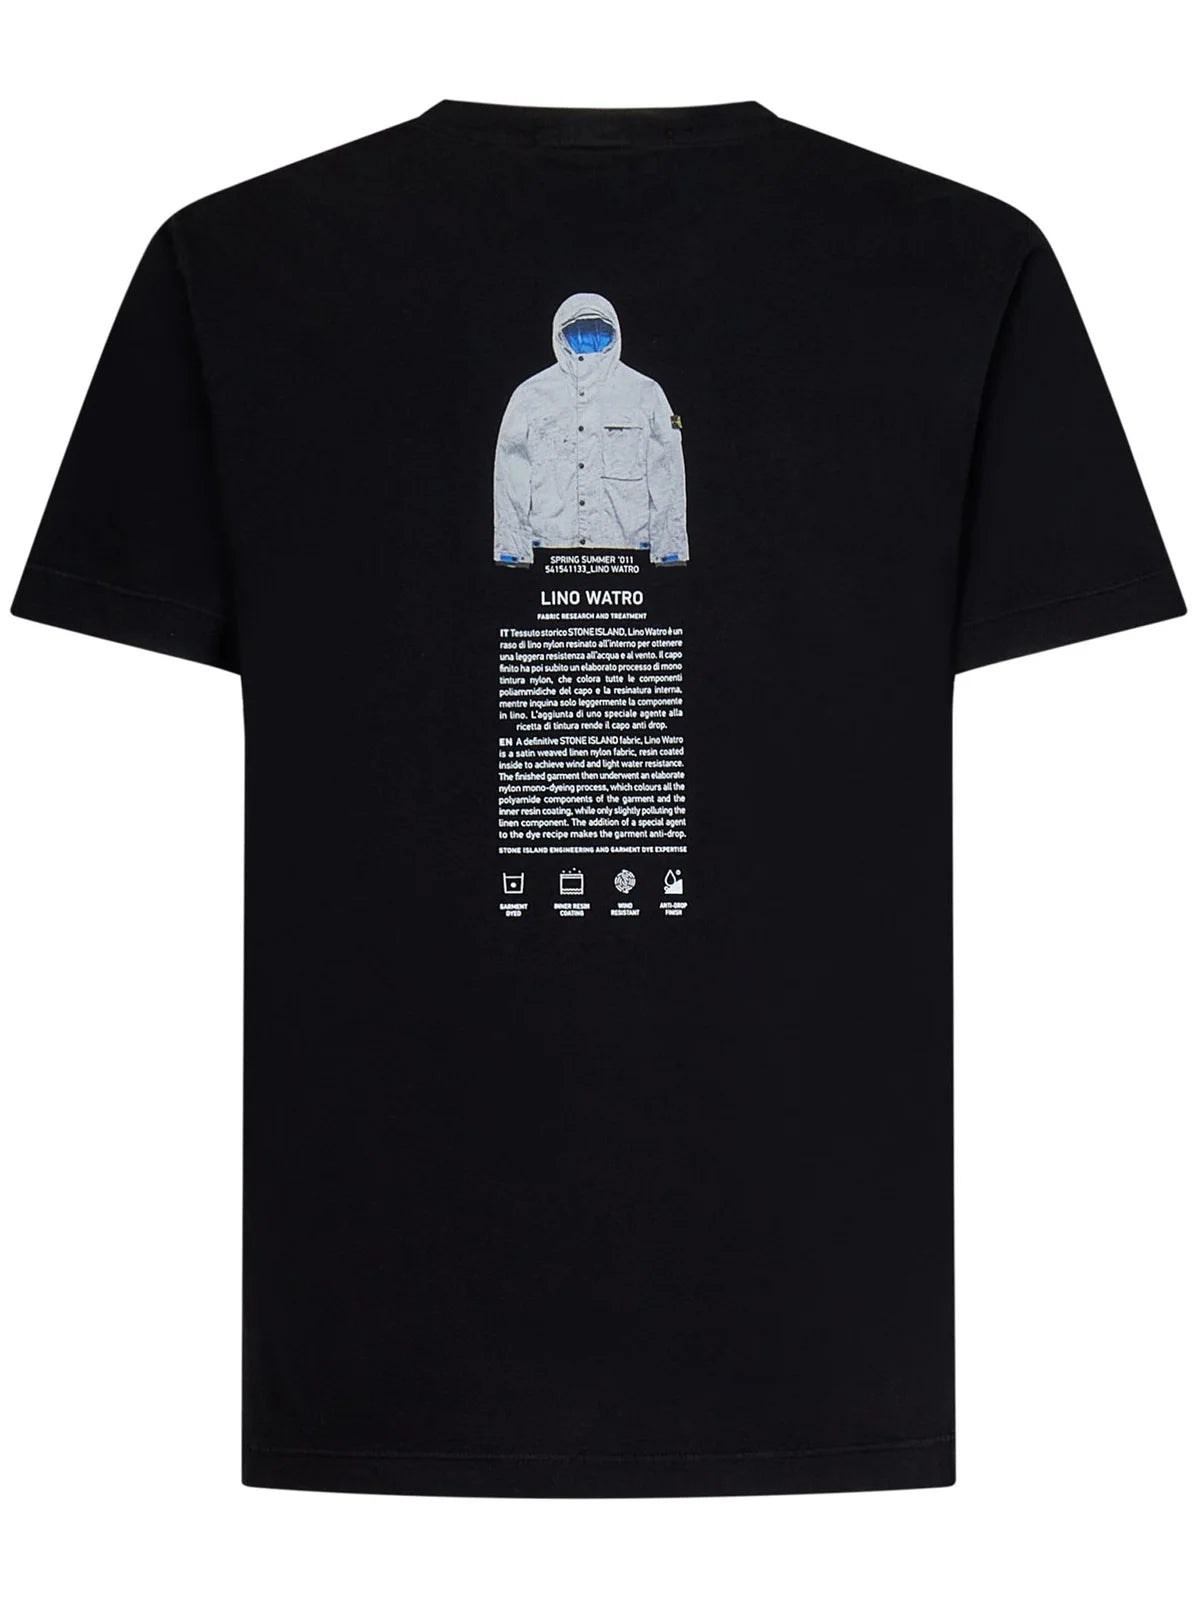 Stone Island Archivio Project T Shirt Black